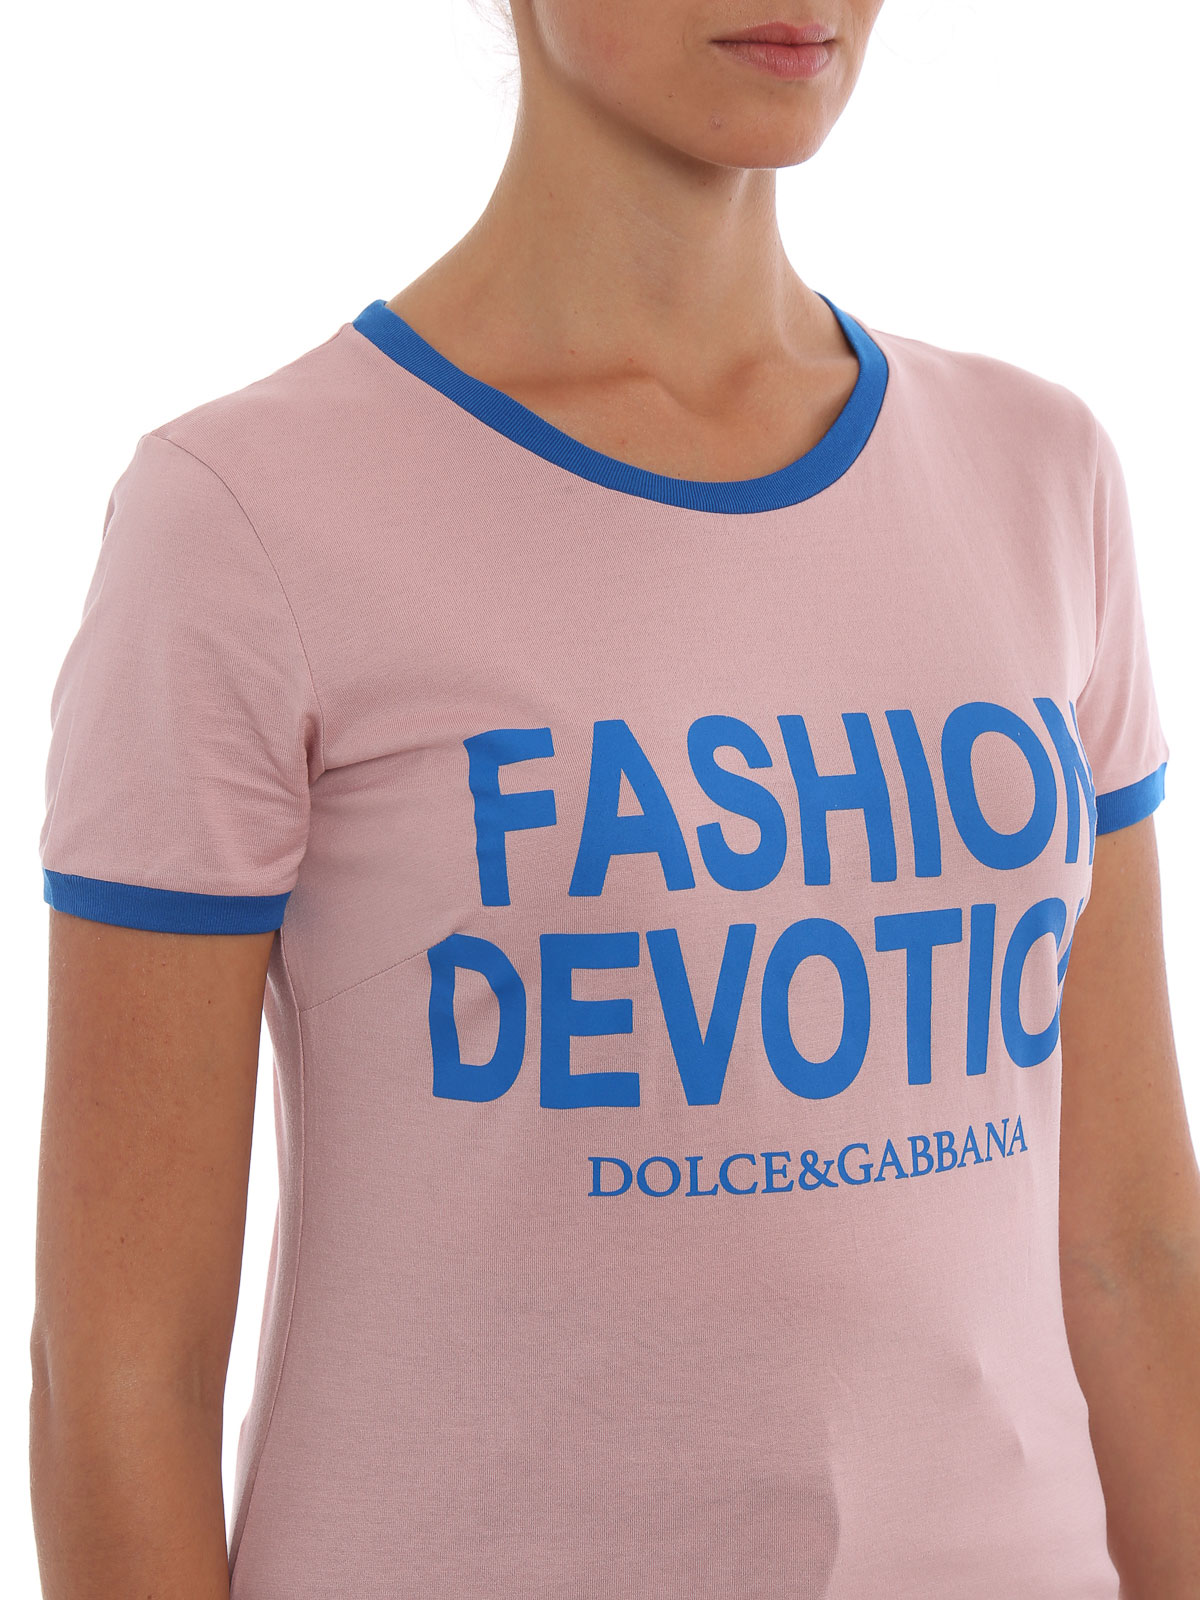 T-shirts Dolce & Gabbana - Fashion Devotion T-shirt - F8H32TG7QRXF0662